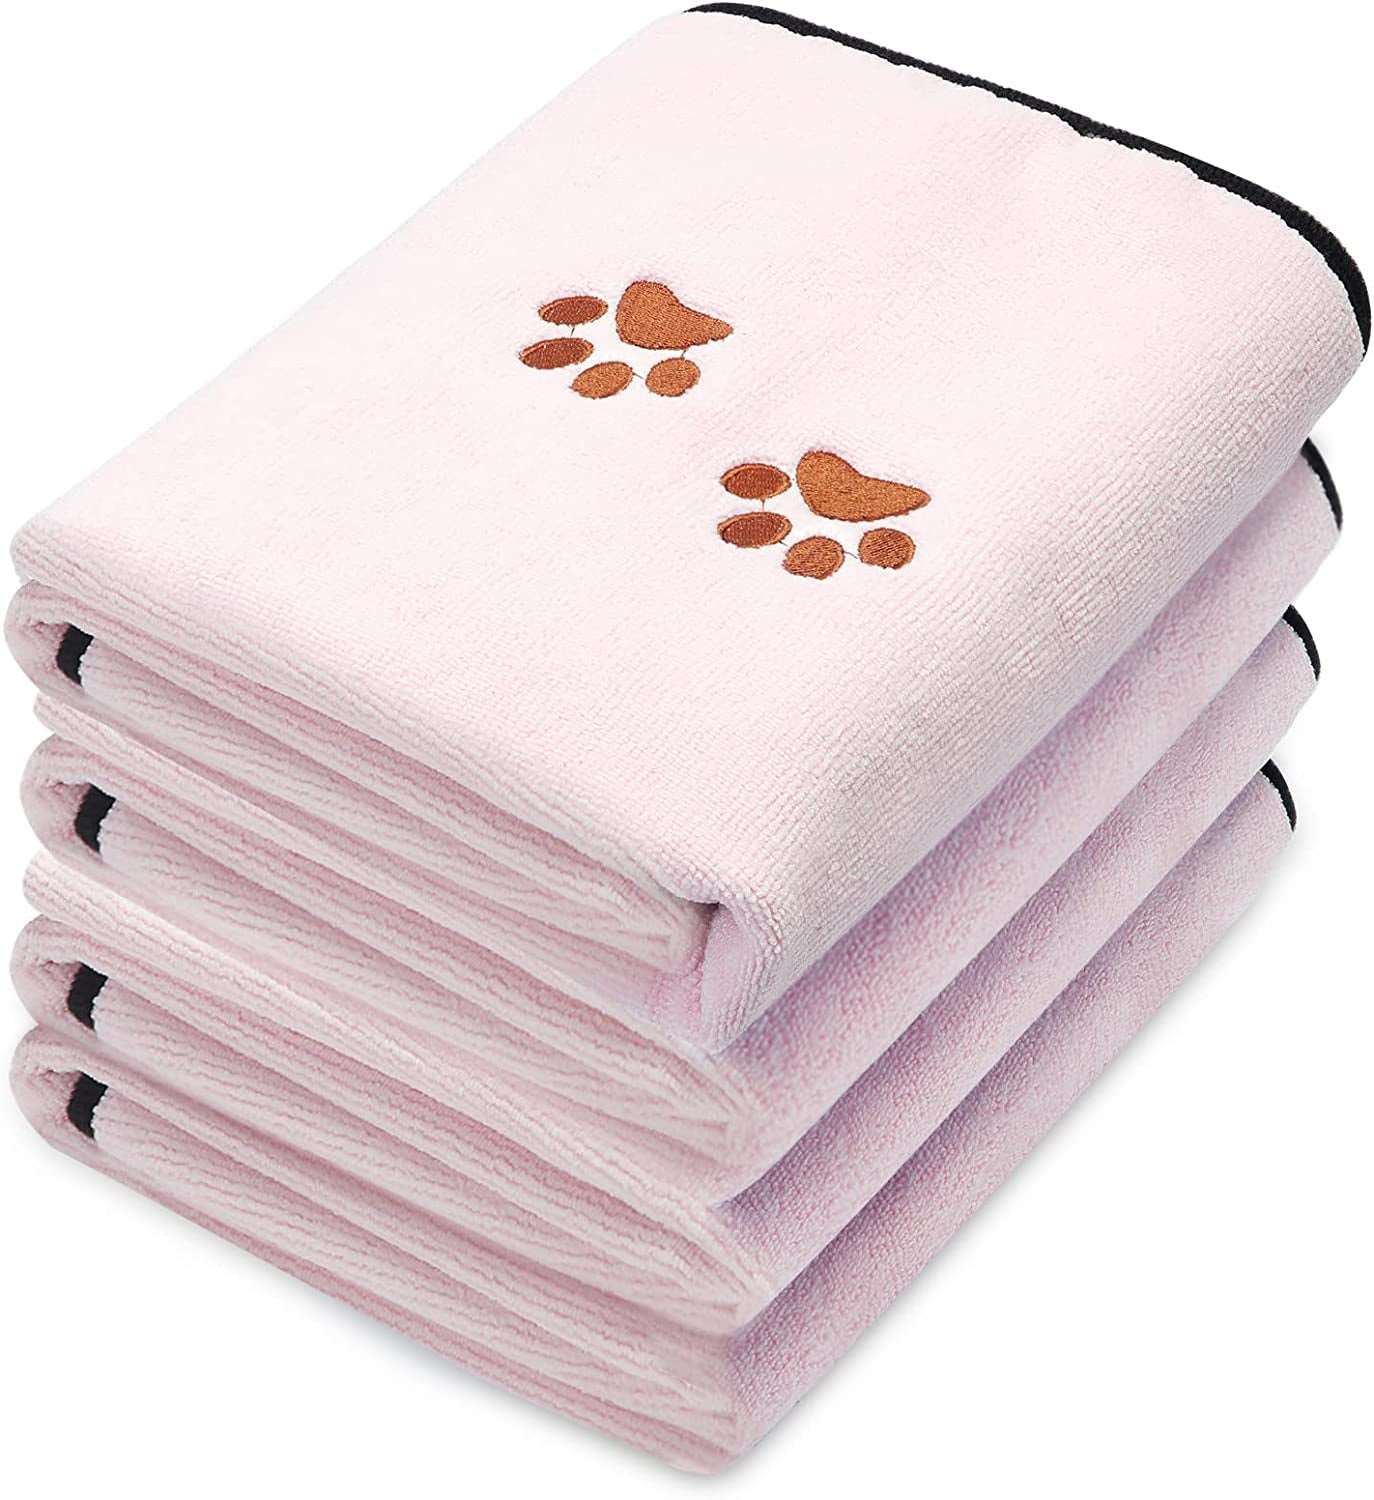 4 Pack Dog Towels Soft Absorbent Pet Bath 